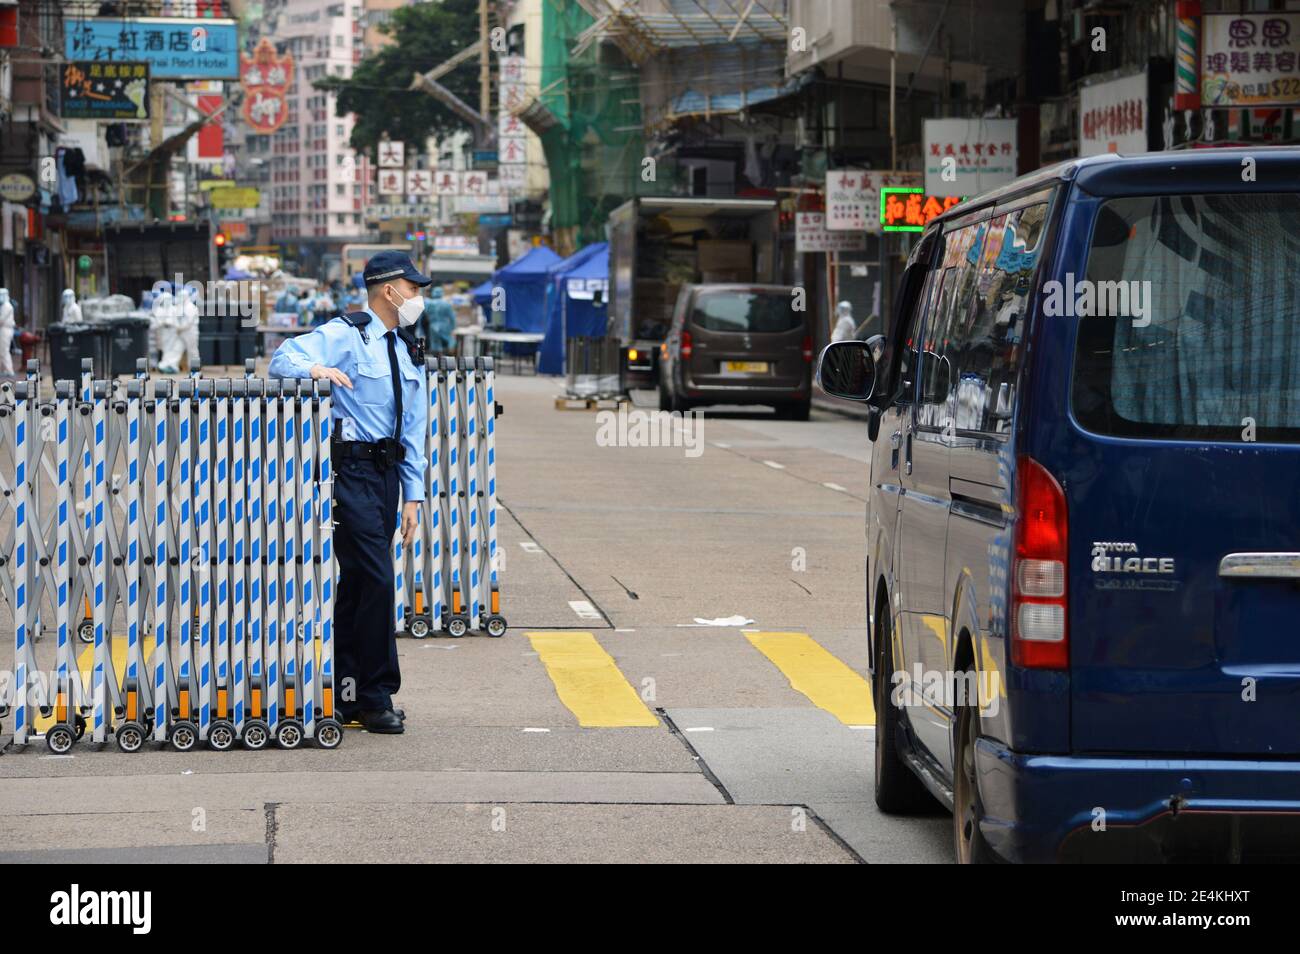 Hong Kong Police roadblock during Covid-19 coronavirus pandemic lockdown in Yau Ma Tei, Kowloon, Hong Kong in January 2021 Stock Photo